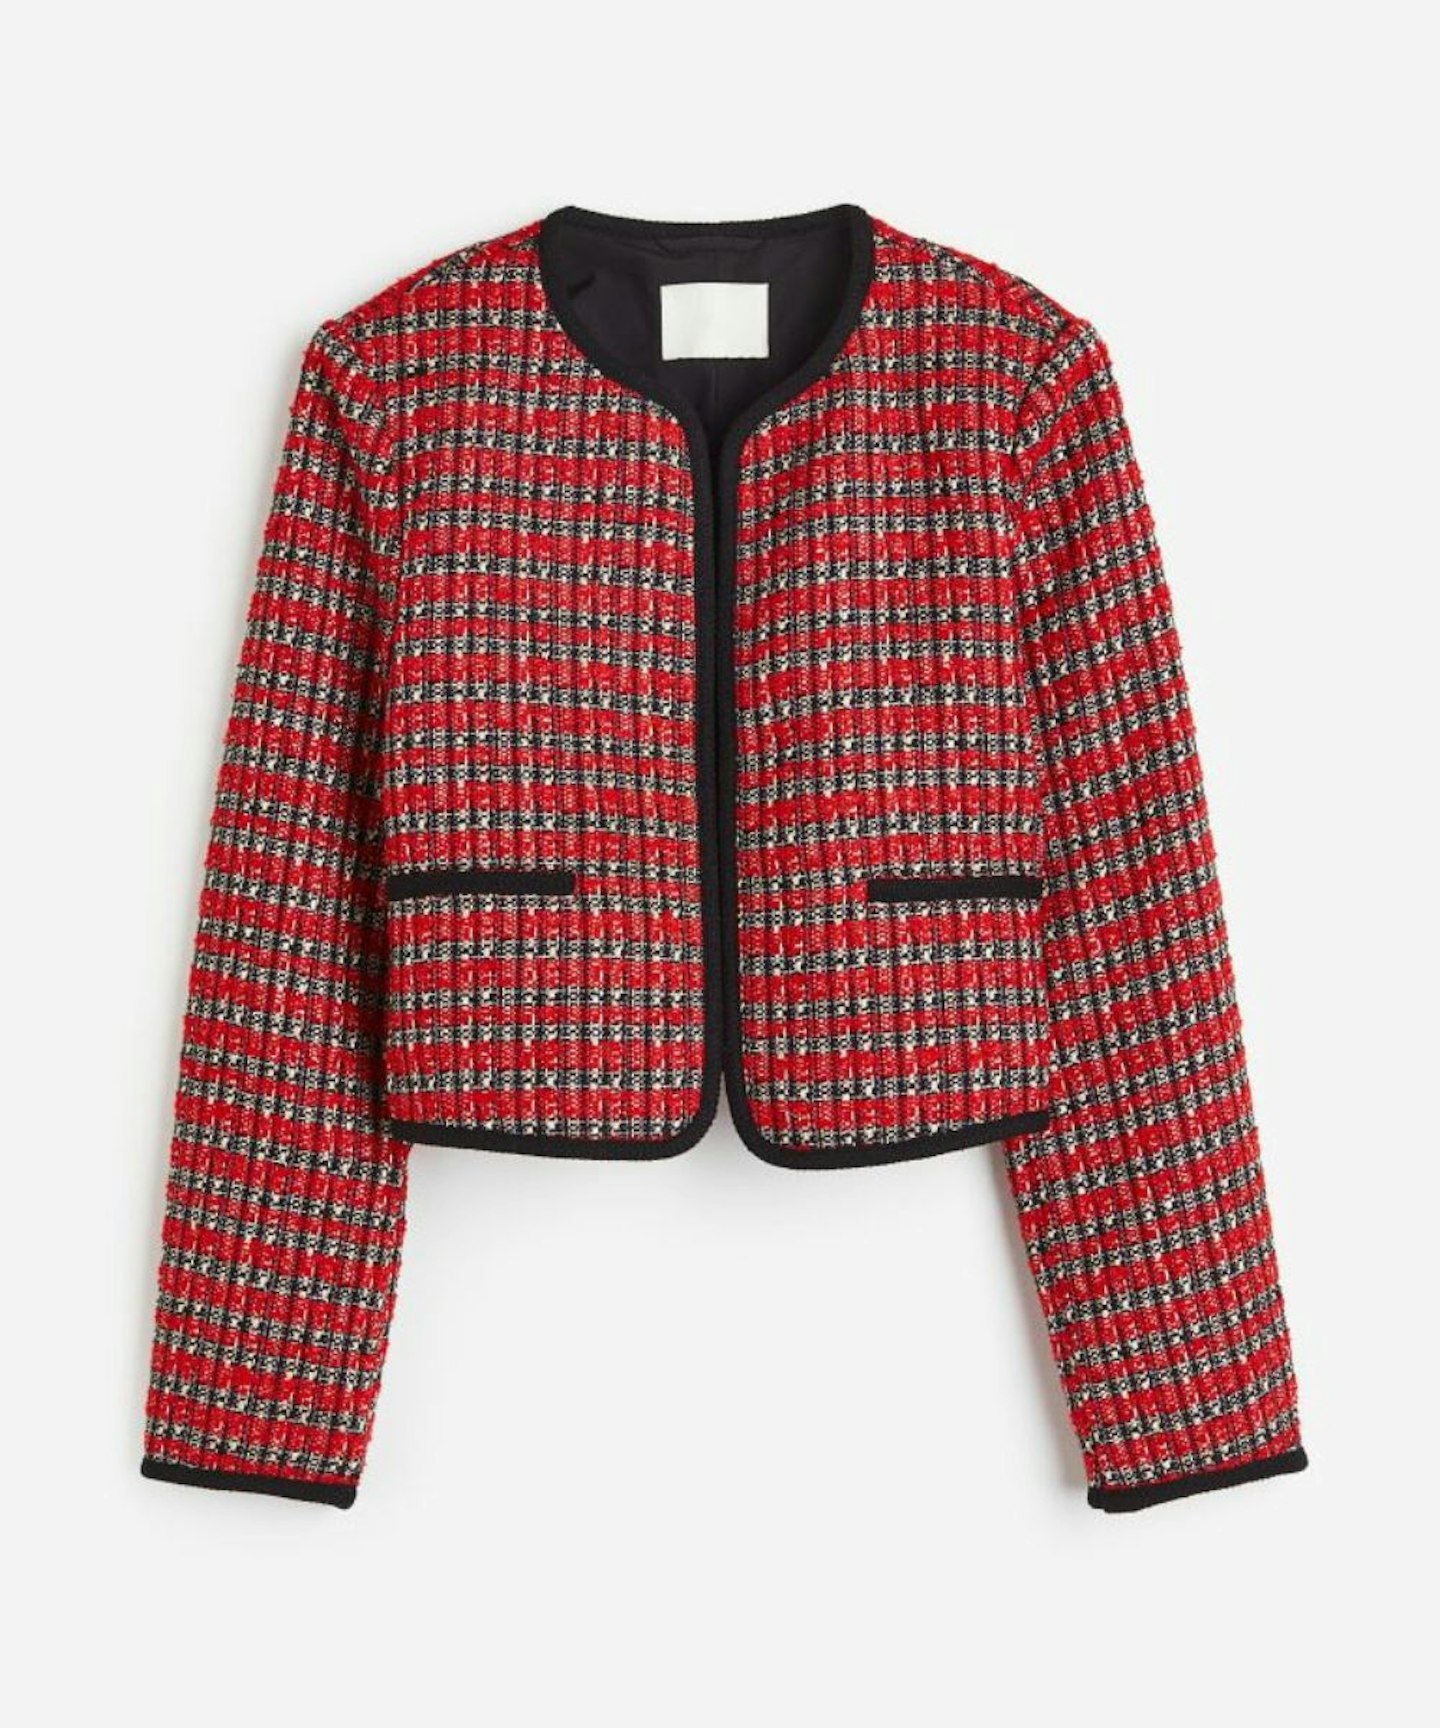 H&M Textured Weave Jacket